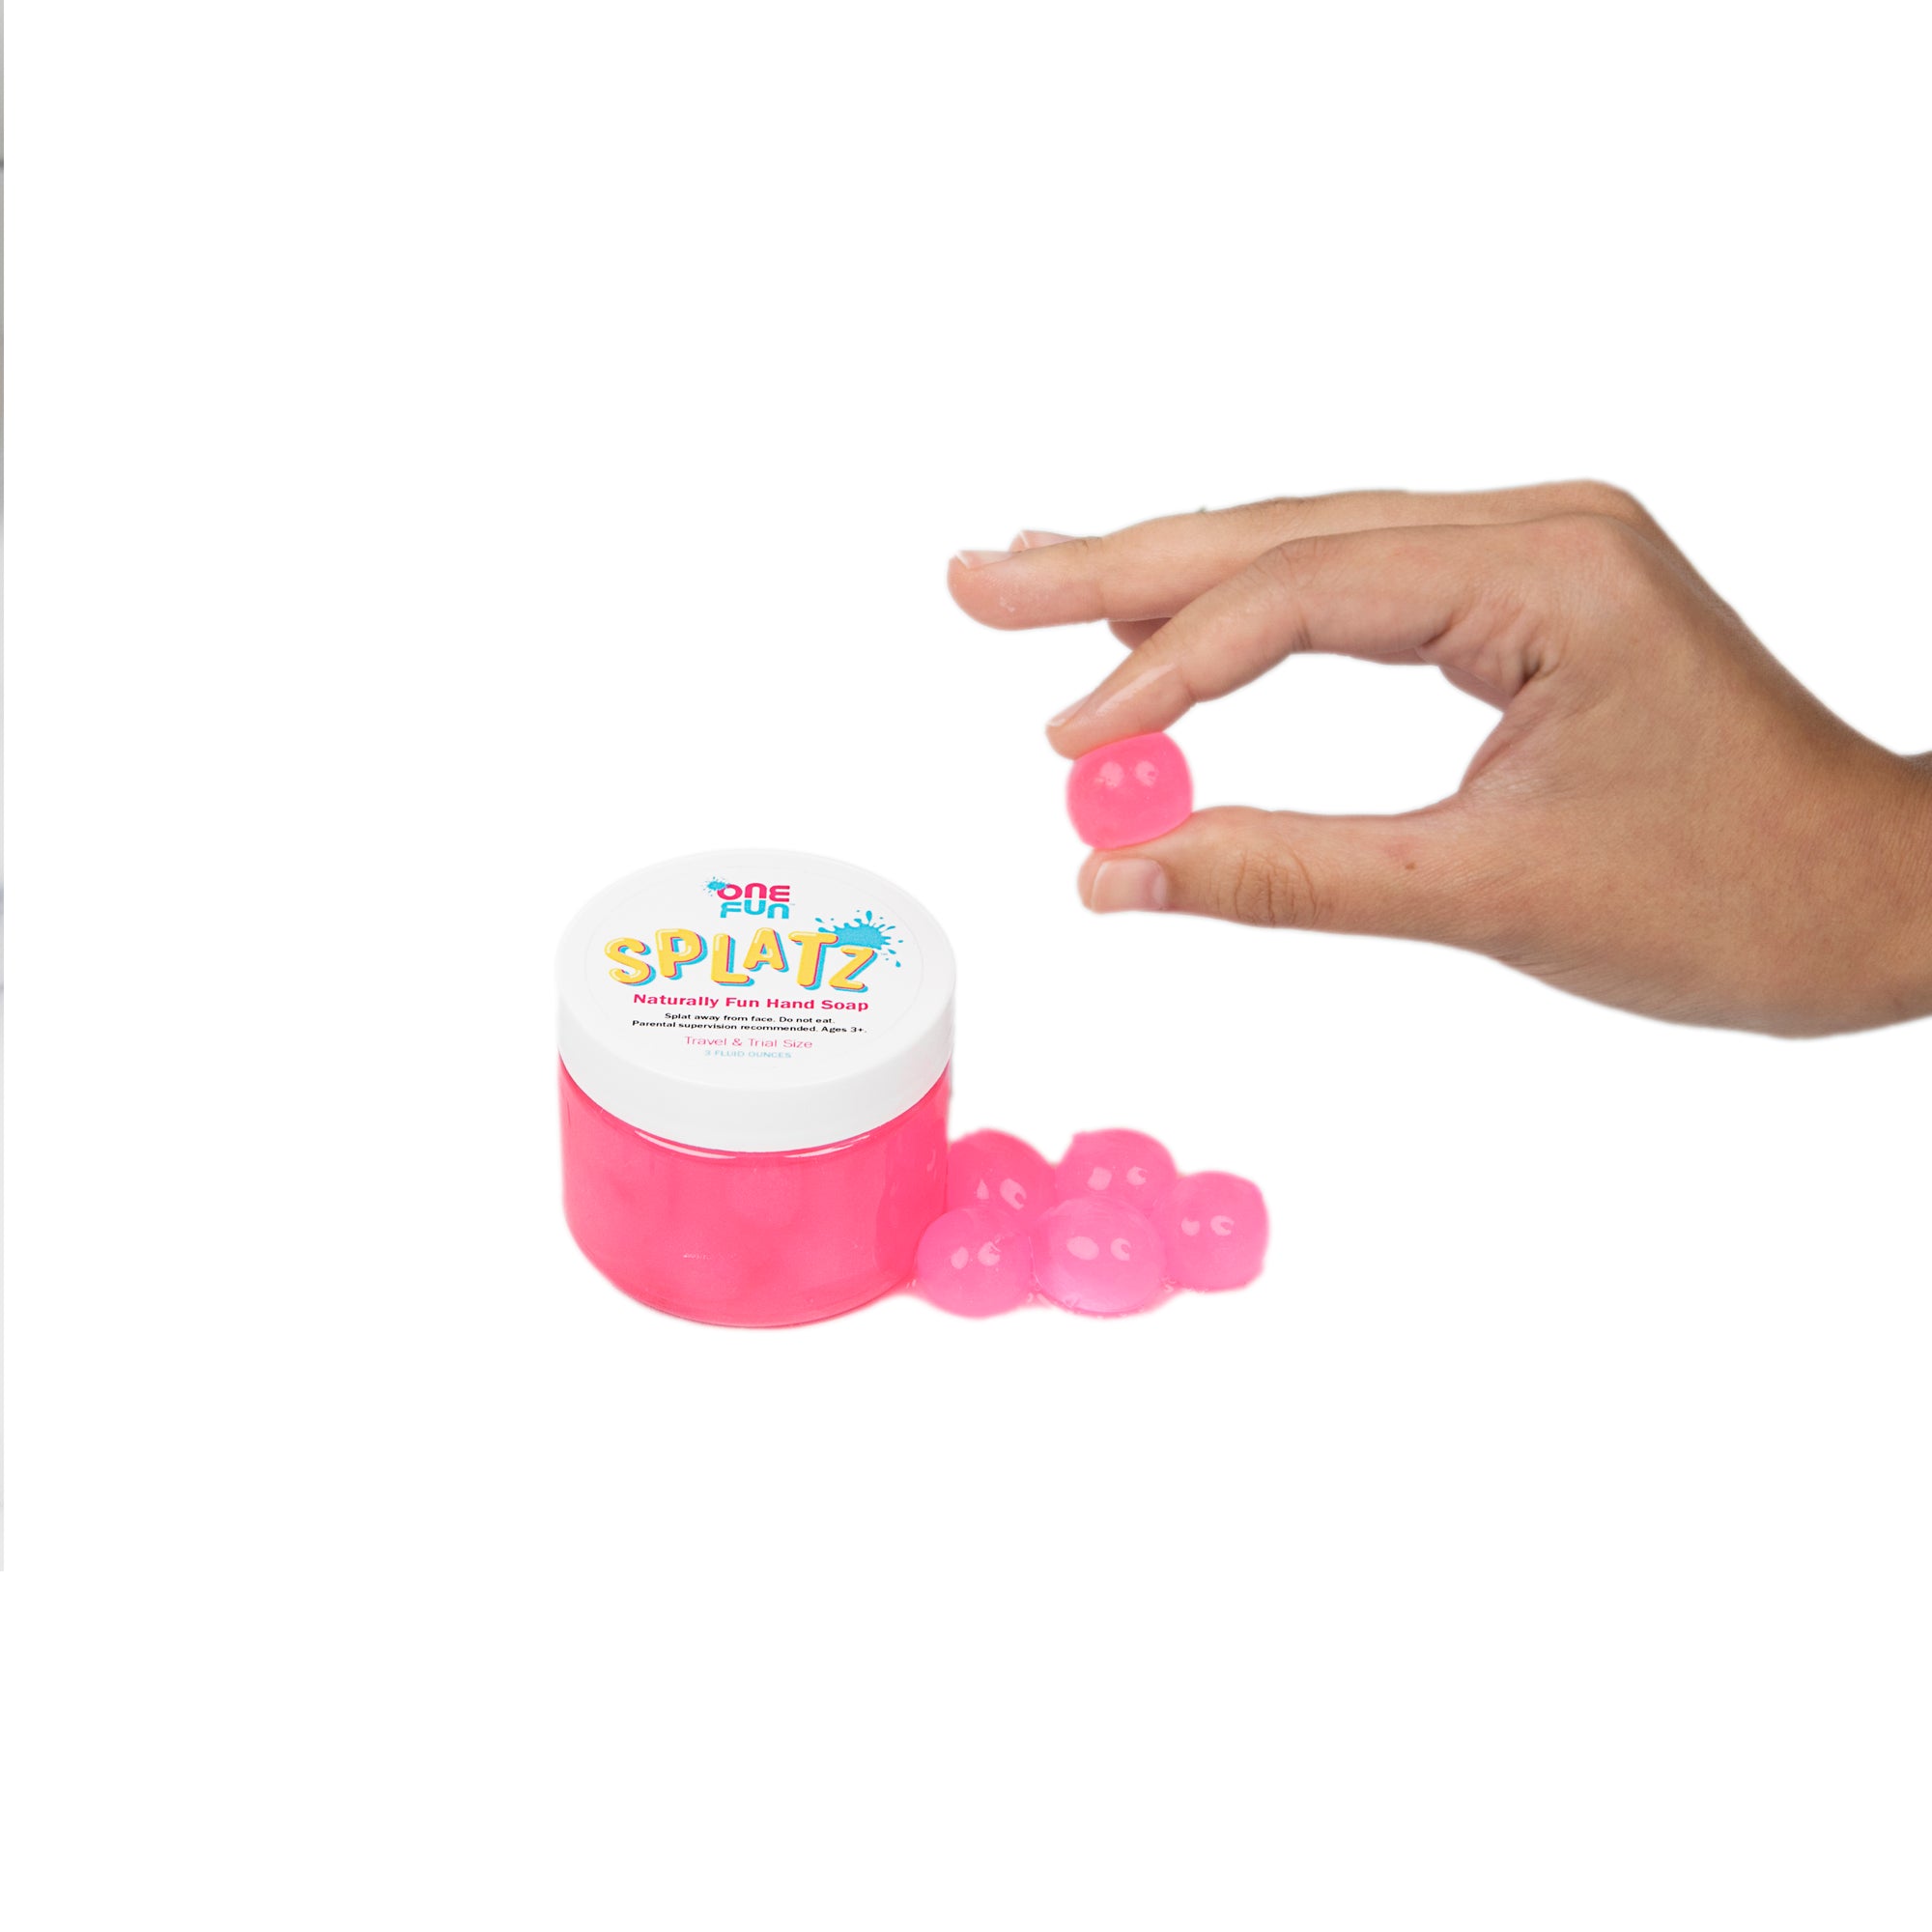 A 3oz jar of pink bursting soap bubbles and a hand holding one pink bursting soap bubble